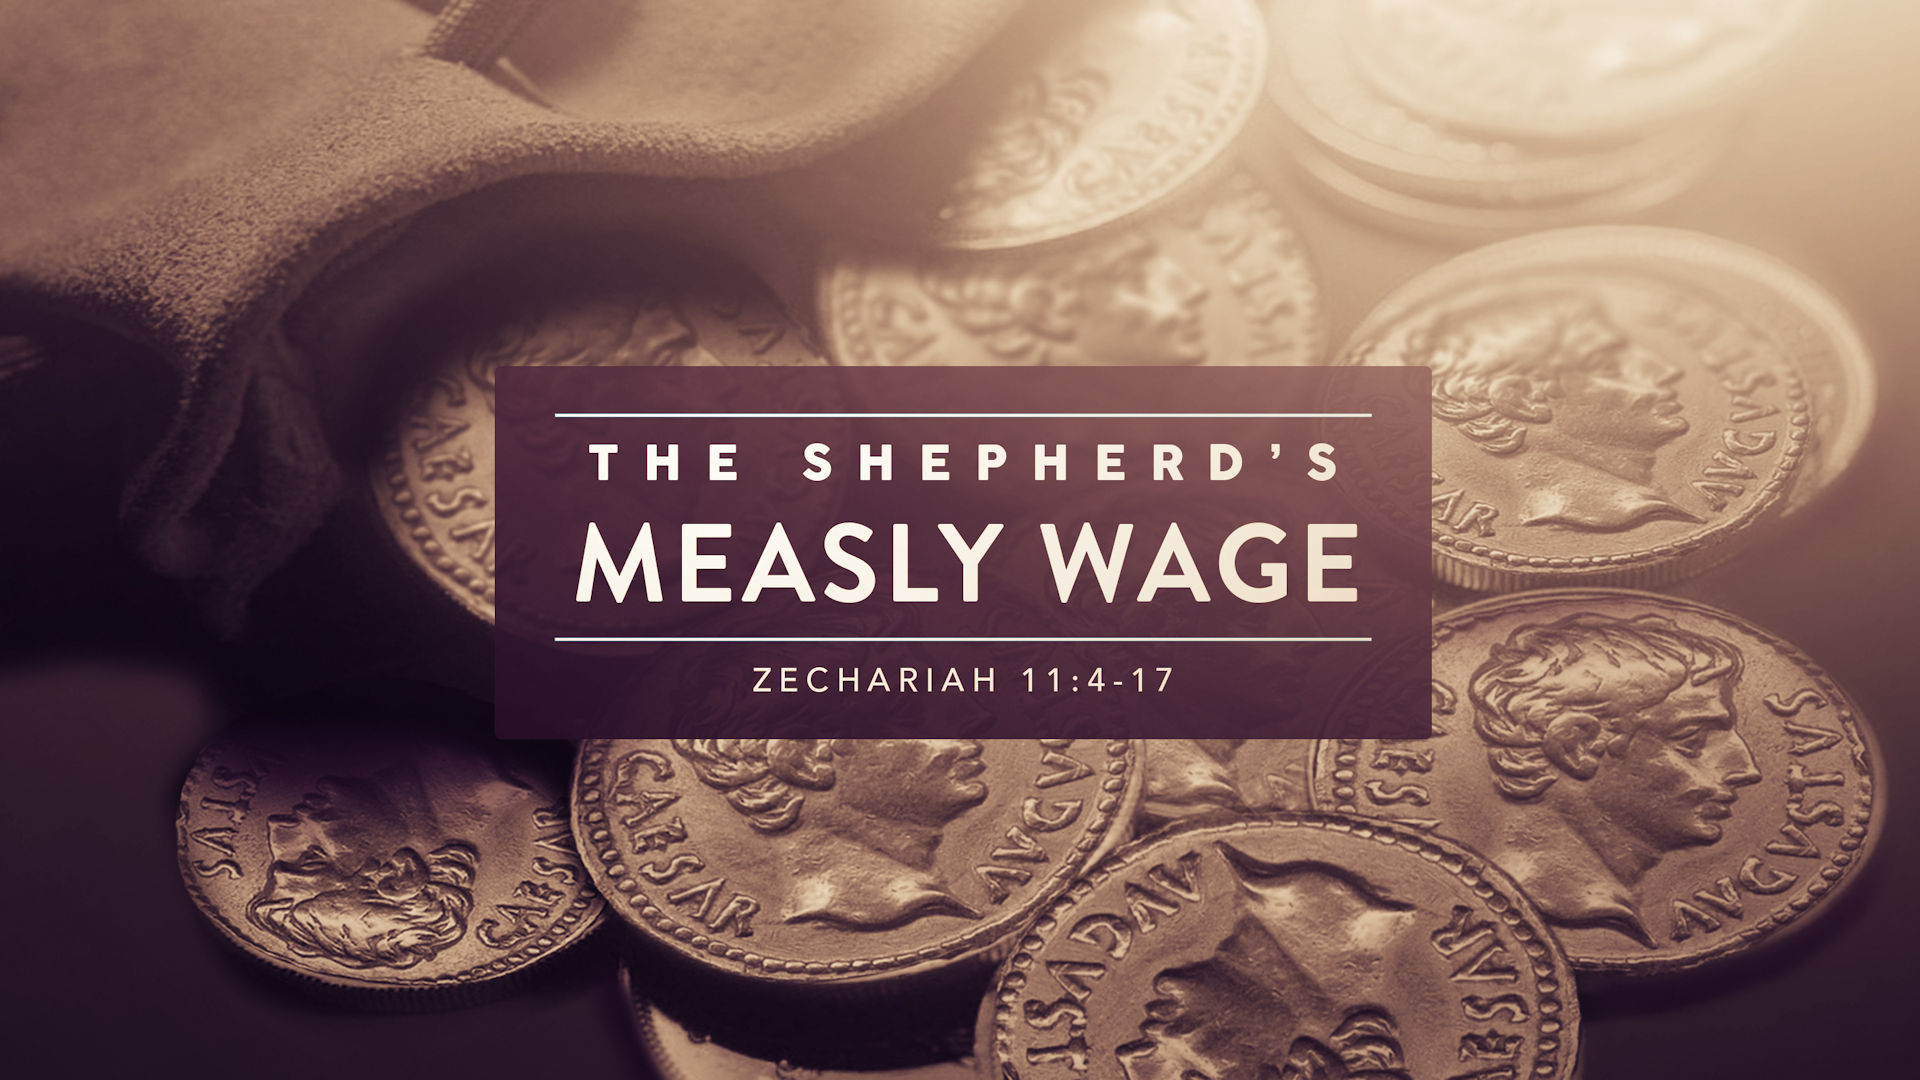 The Shepherd's Measly Wage